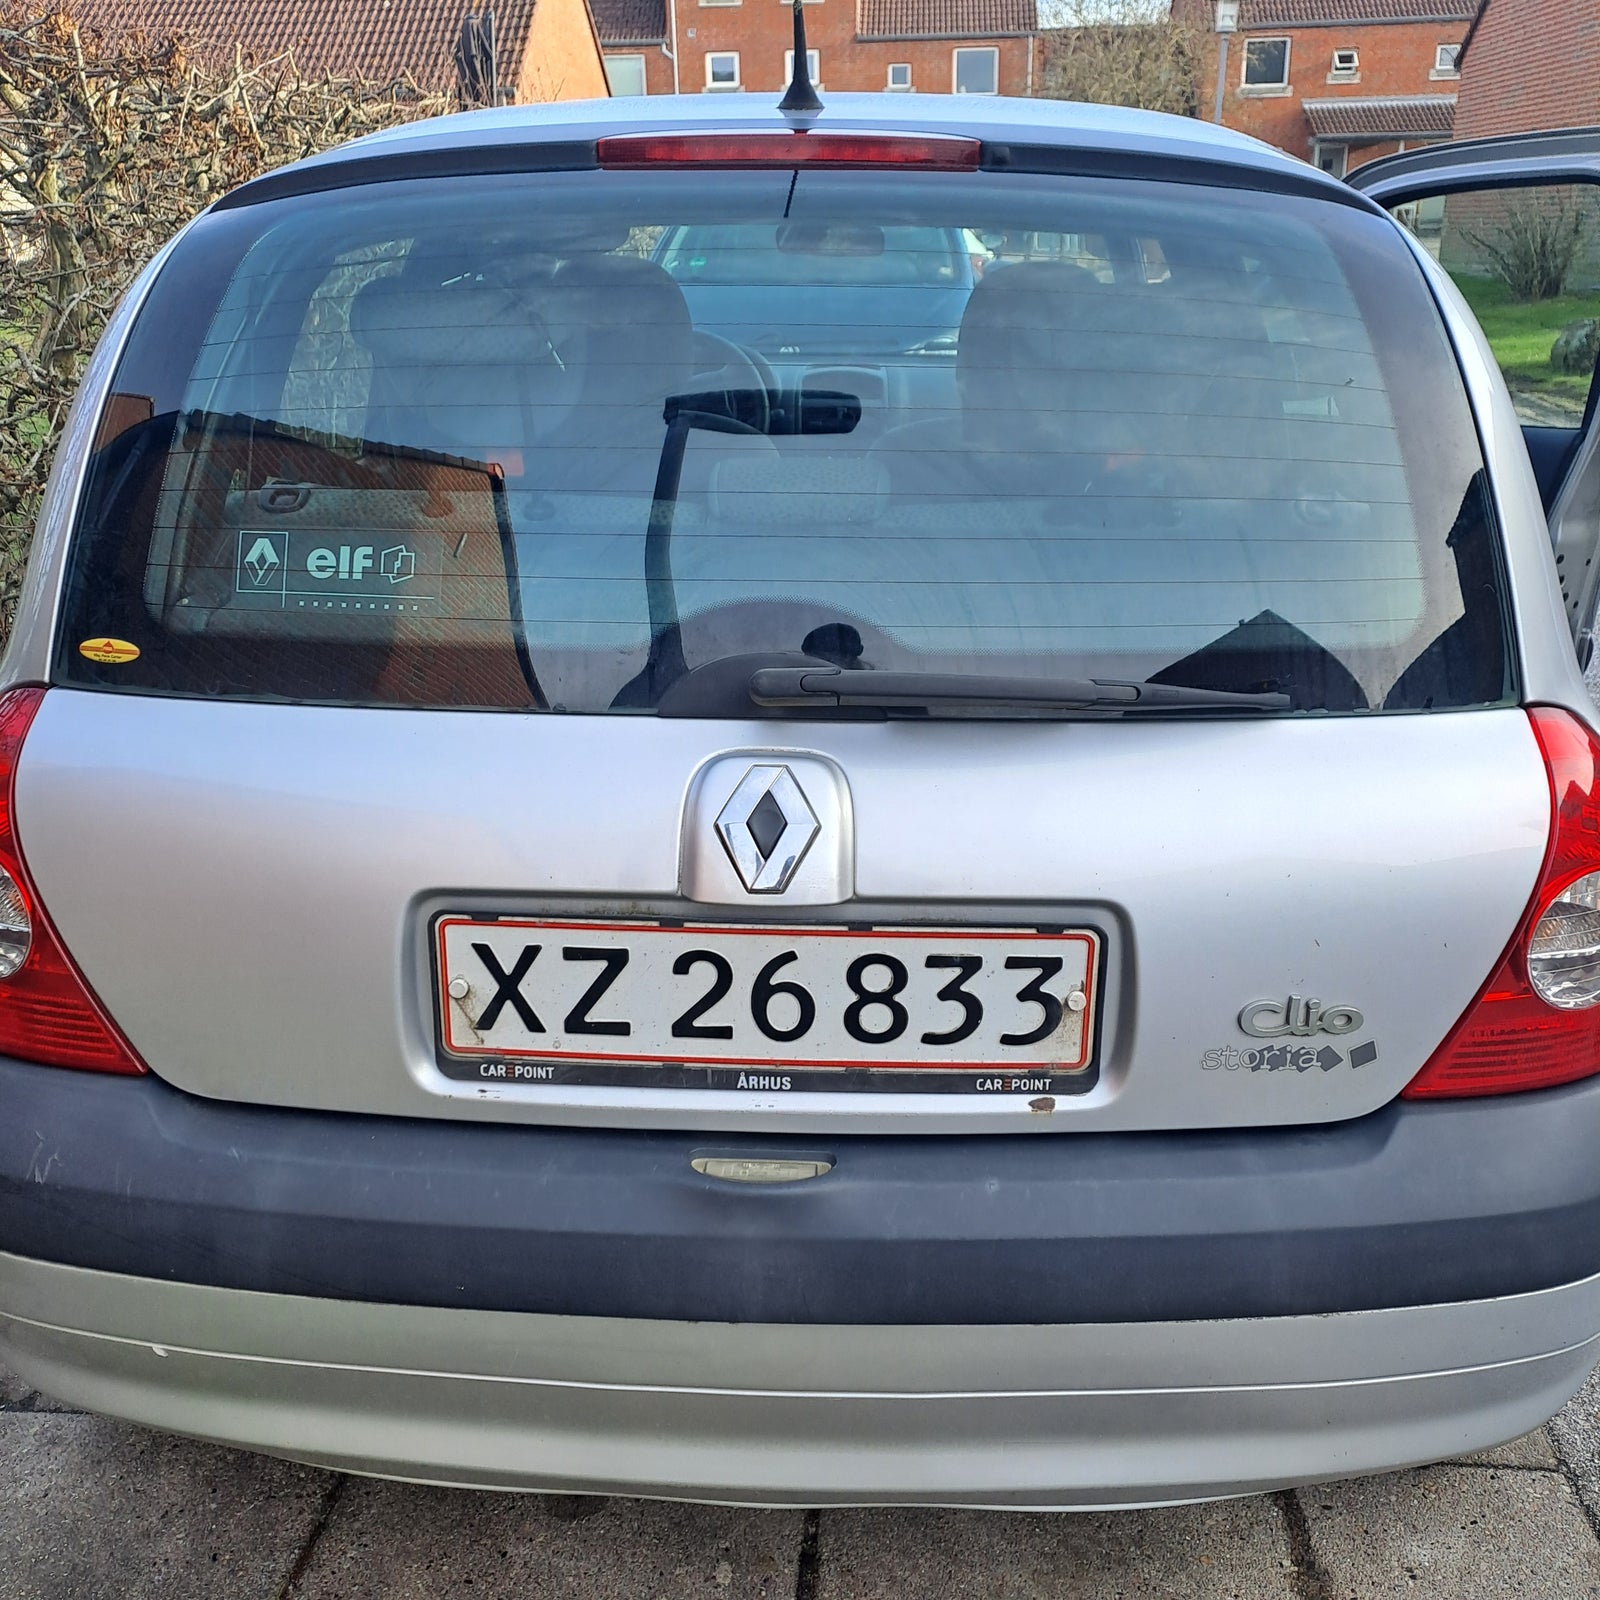 Renault Clio II, 1,2 8V Basic, Benzin